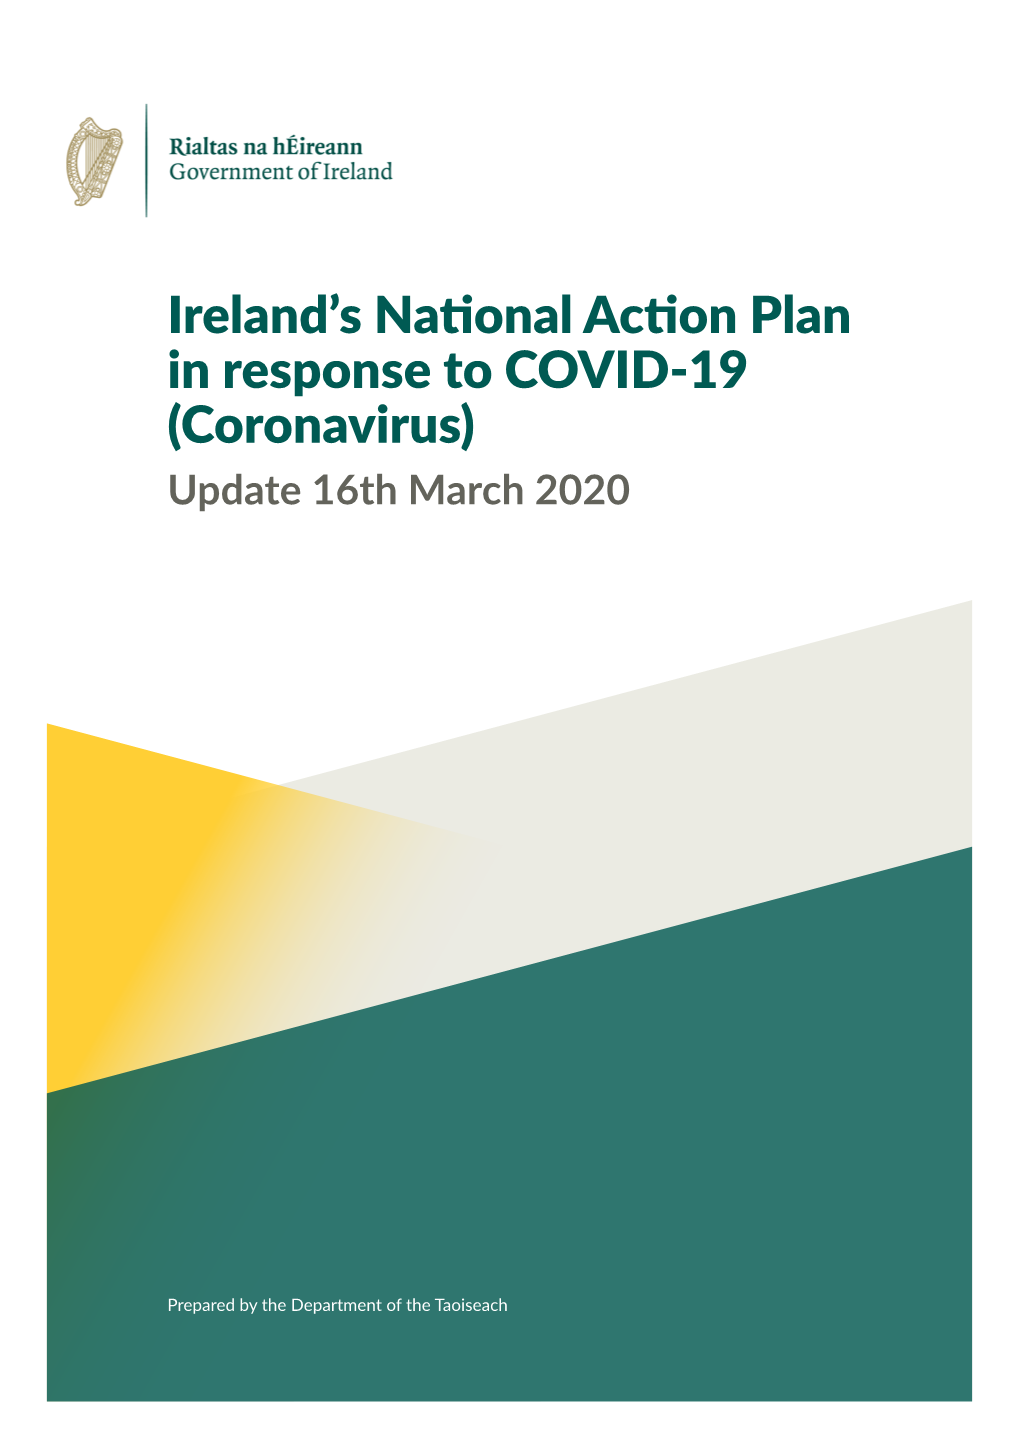 Ireland's National Action Plan in Response to COVID-19 (Coronavirus)